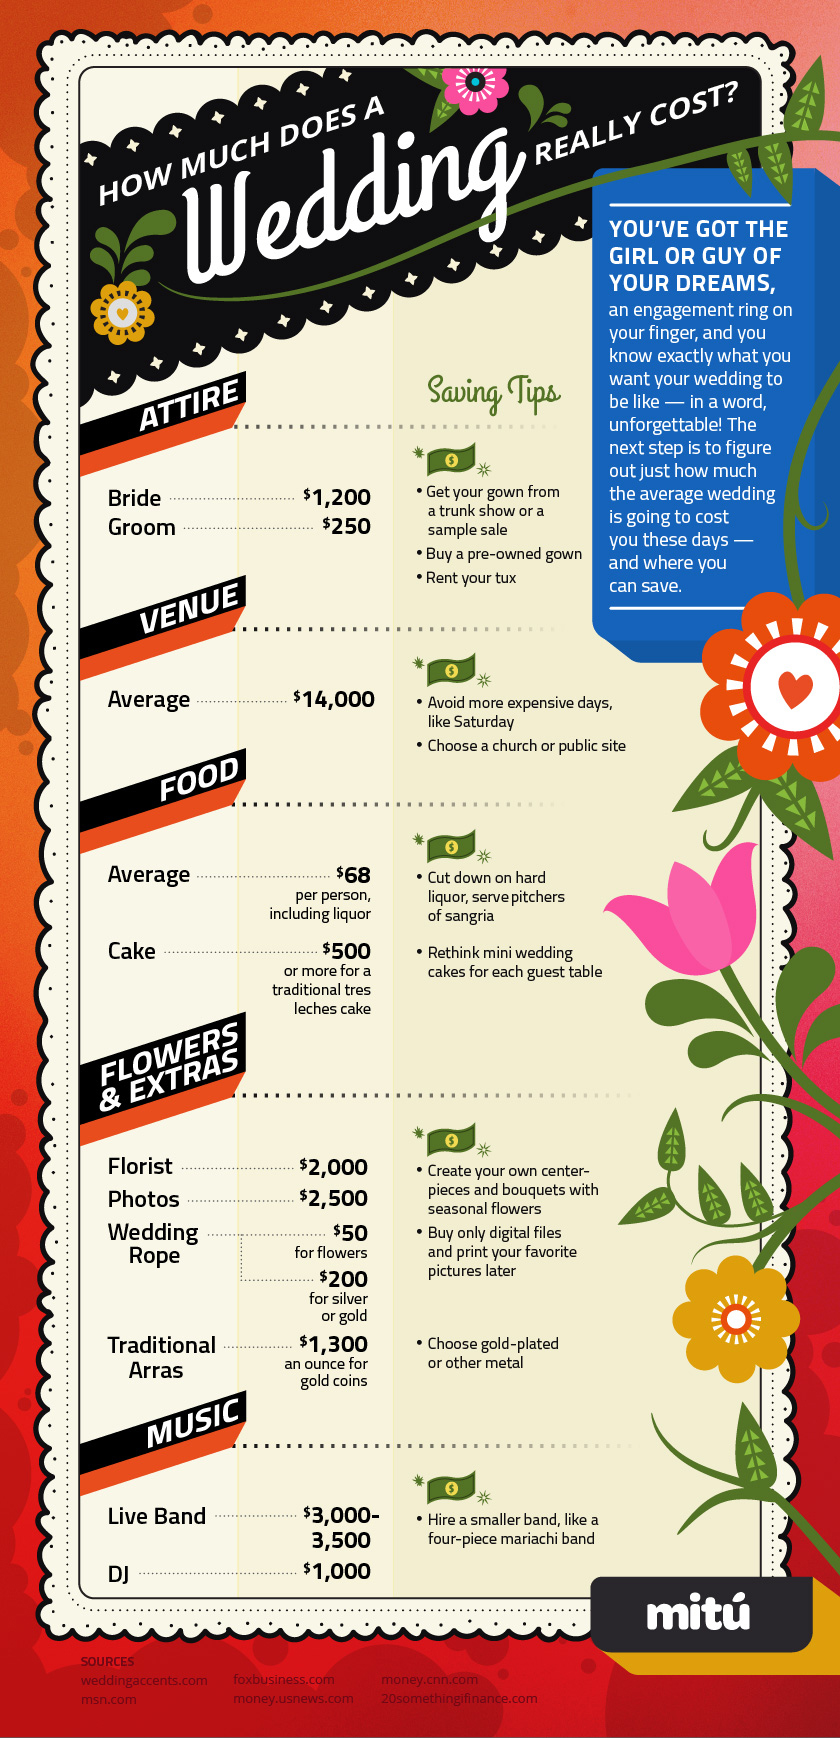 mitú: How Much Does a Wedding Really Cost? Visual Checklist